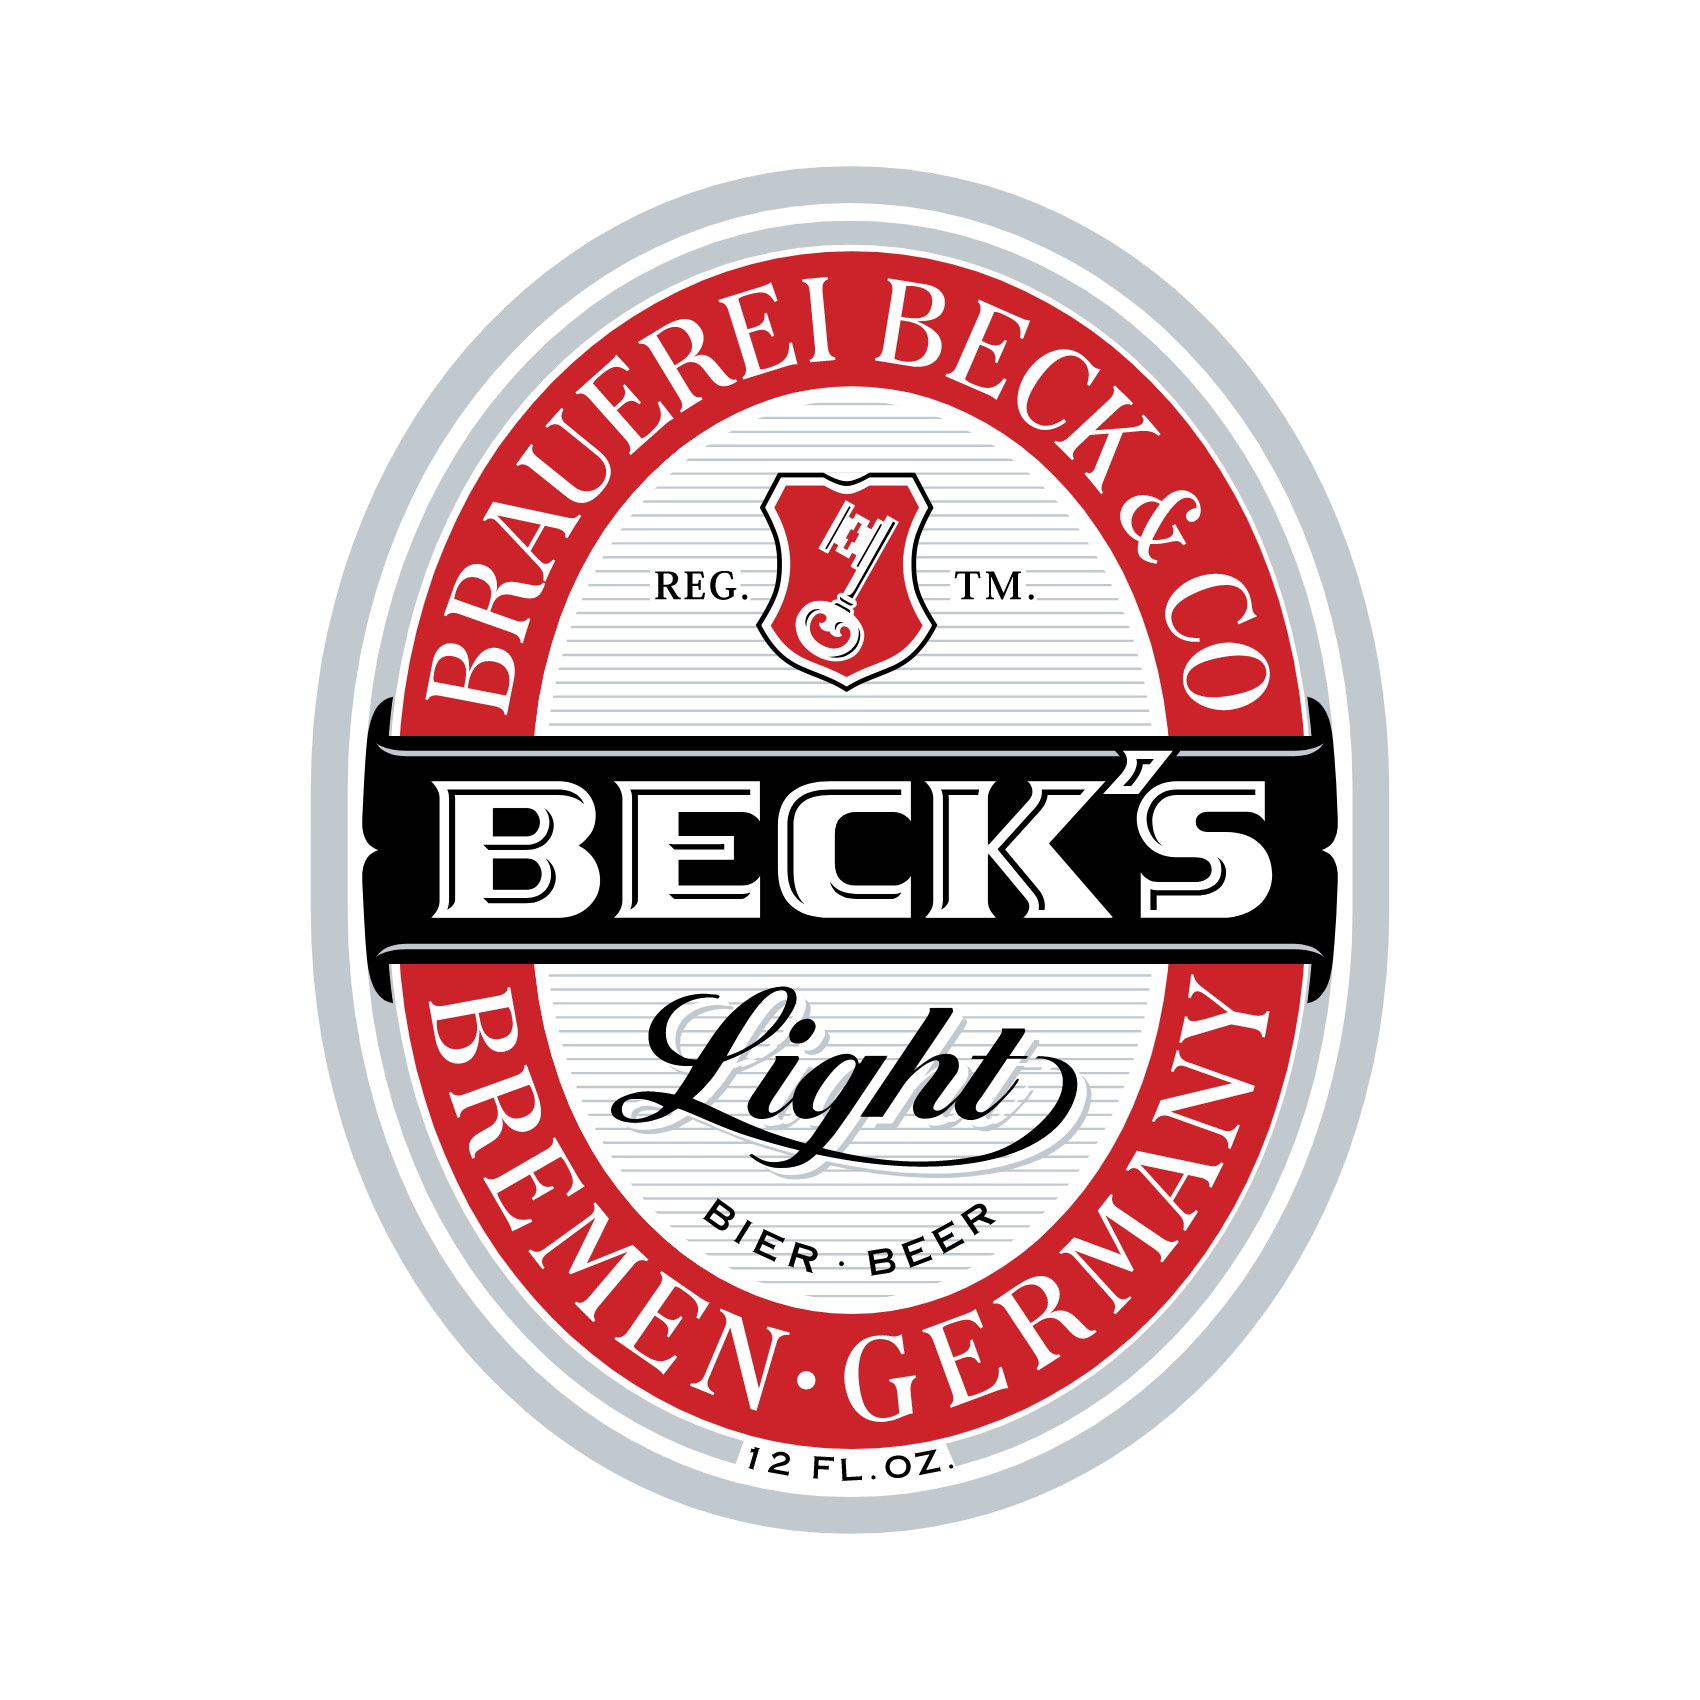 Download Becks Logo PNG and Vector (PDF, SVG, Ai, EPS) Free